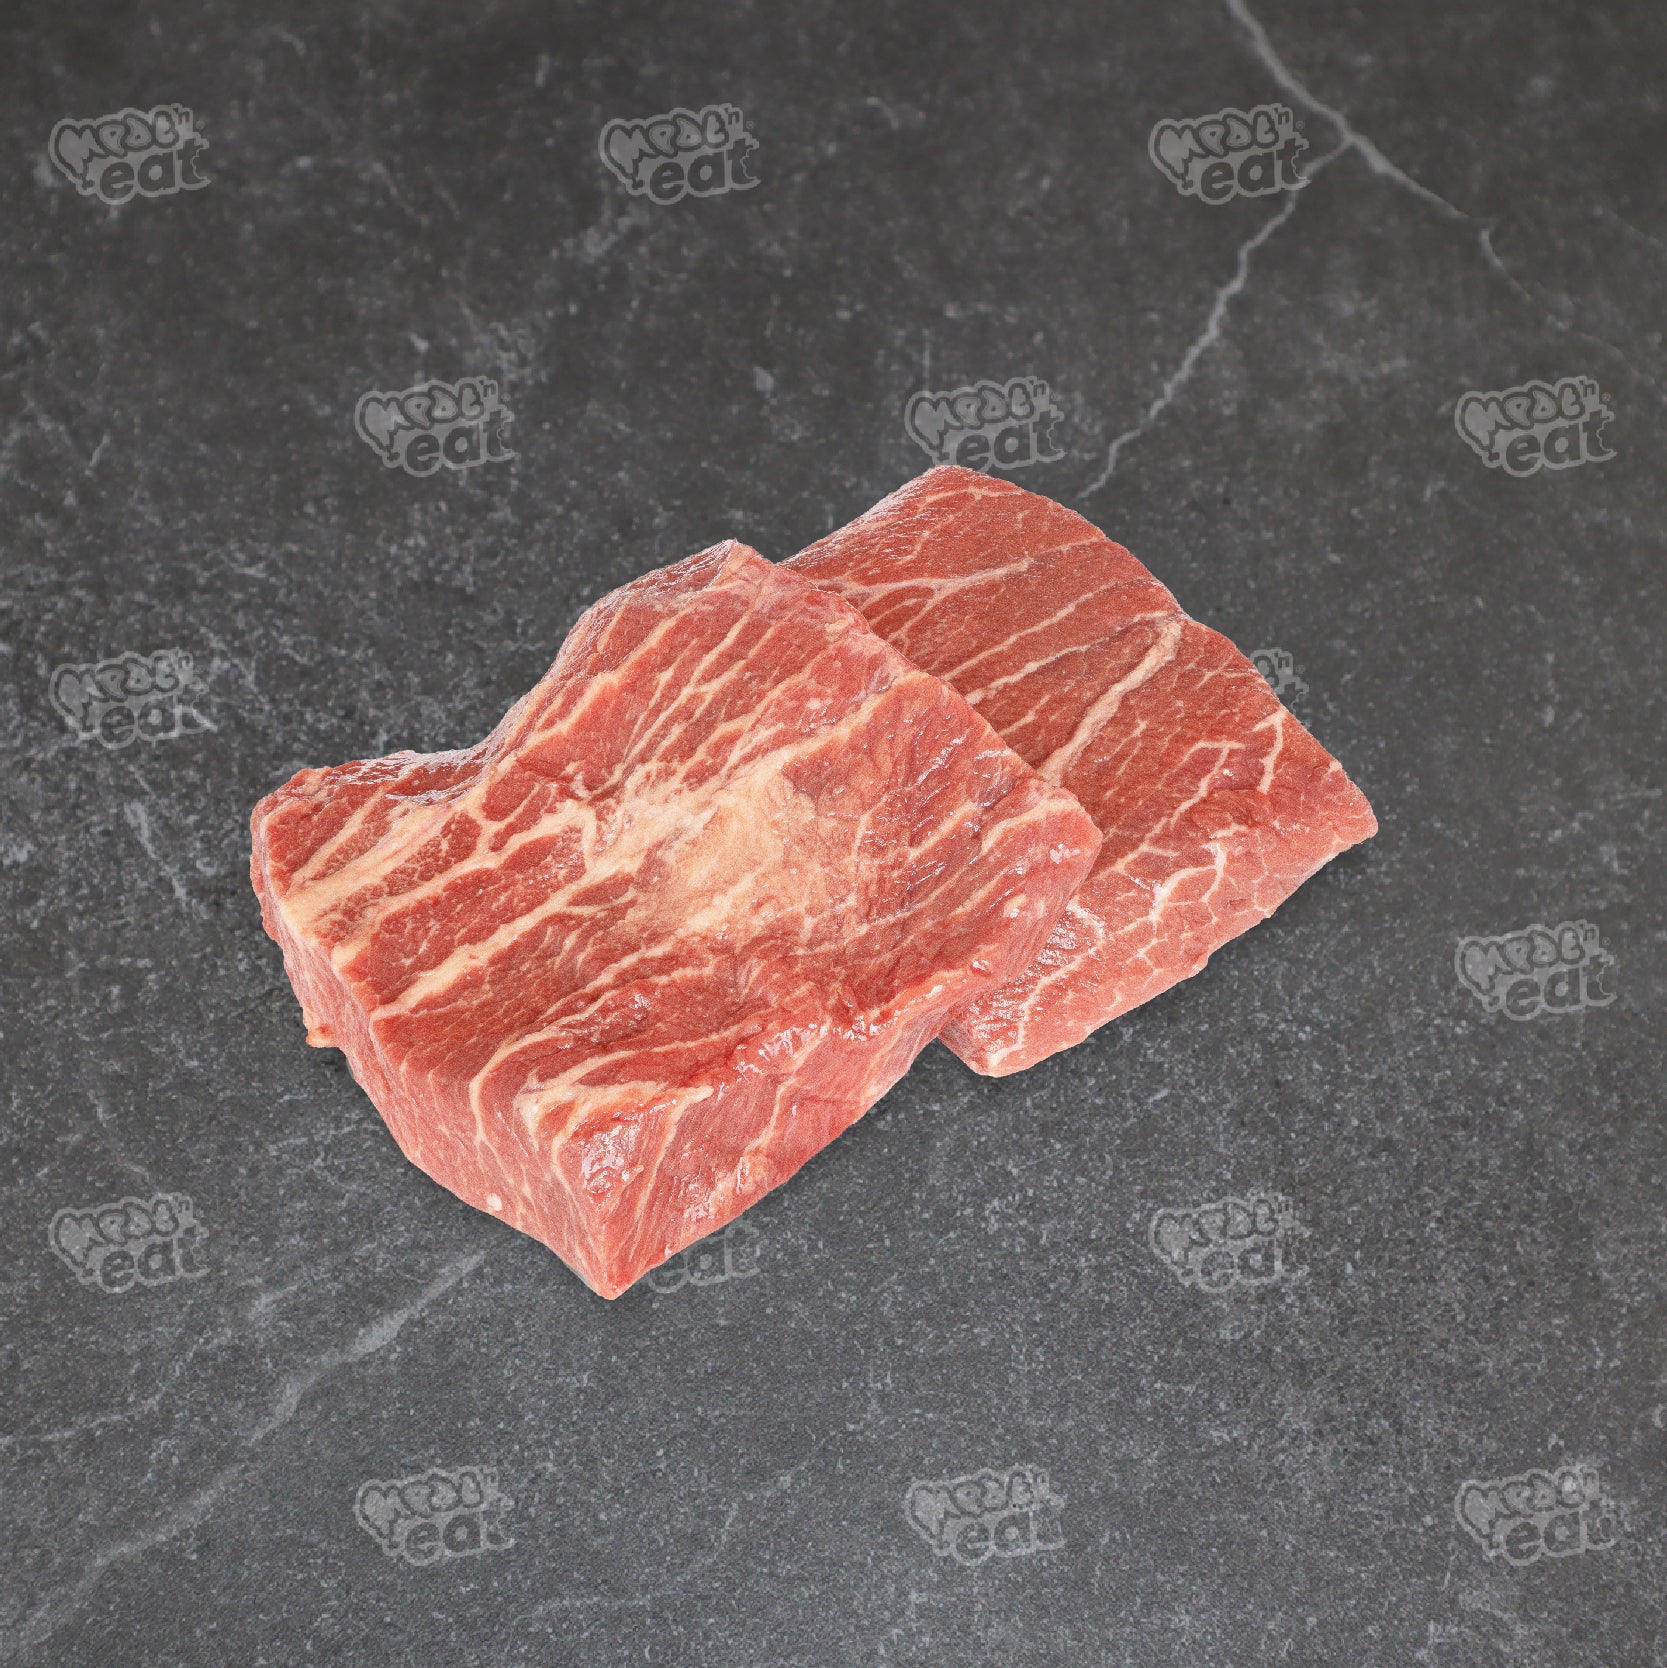 UMI Flat-iron / sucade beef